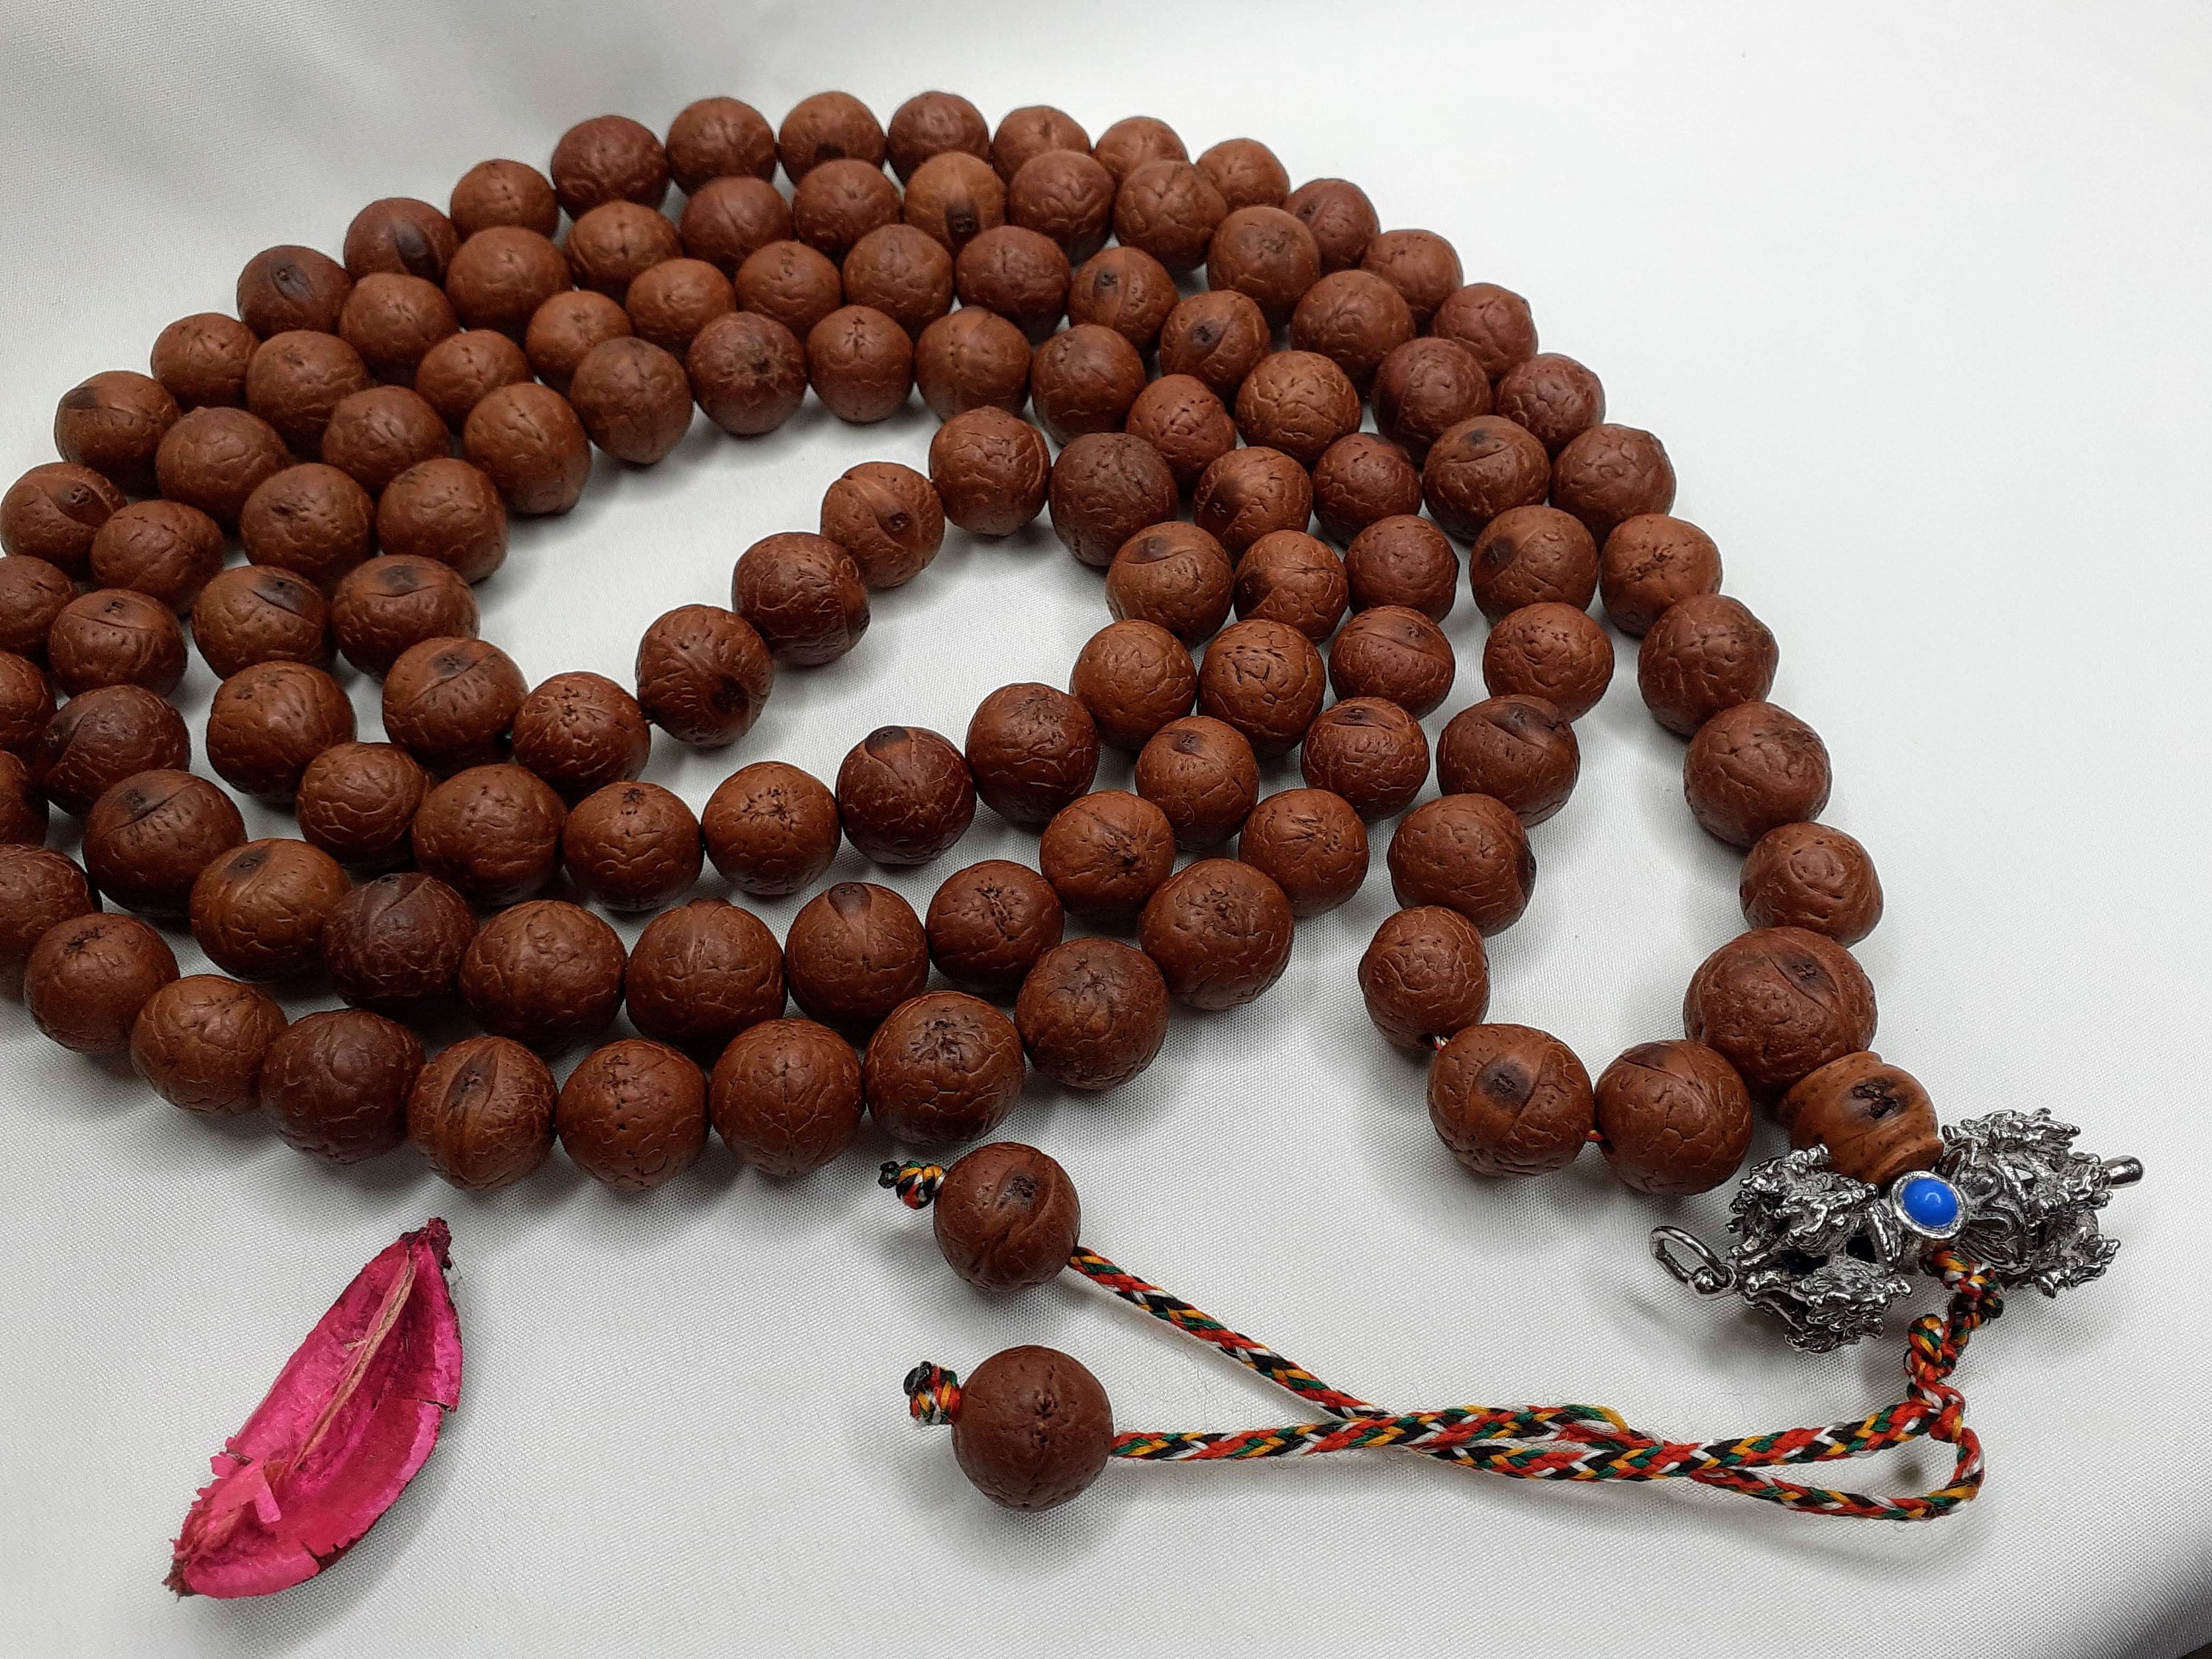 Bodhi Seed Mala,aged Bodhi Seeds, Buddhist Beads, Hand String Necklace,  Tibetan Prayer,hindu Mantra Chanting ,meditation Tools,monk Bracelet 